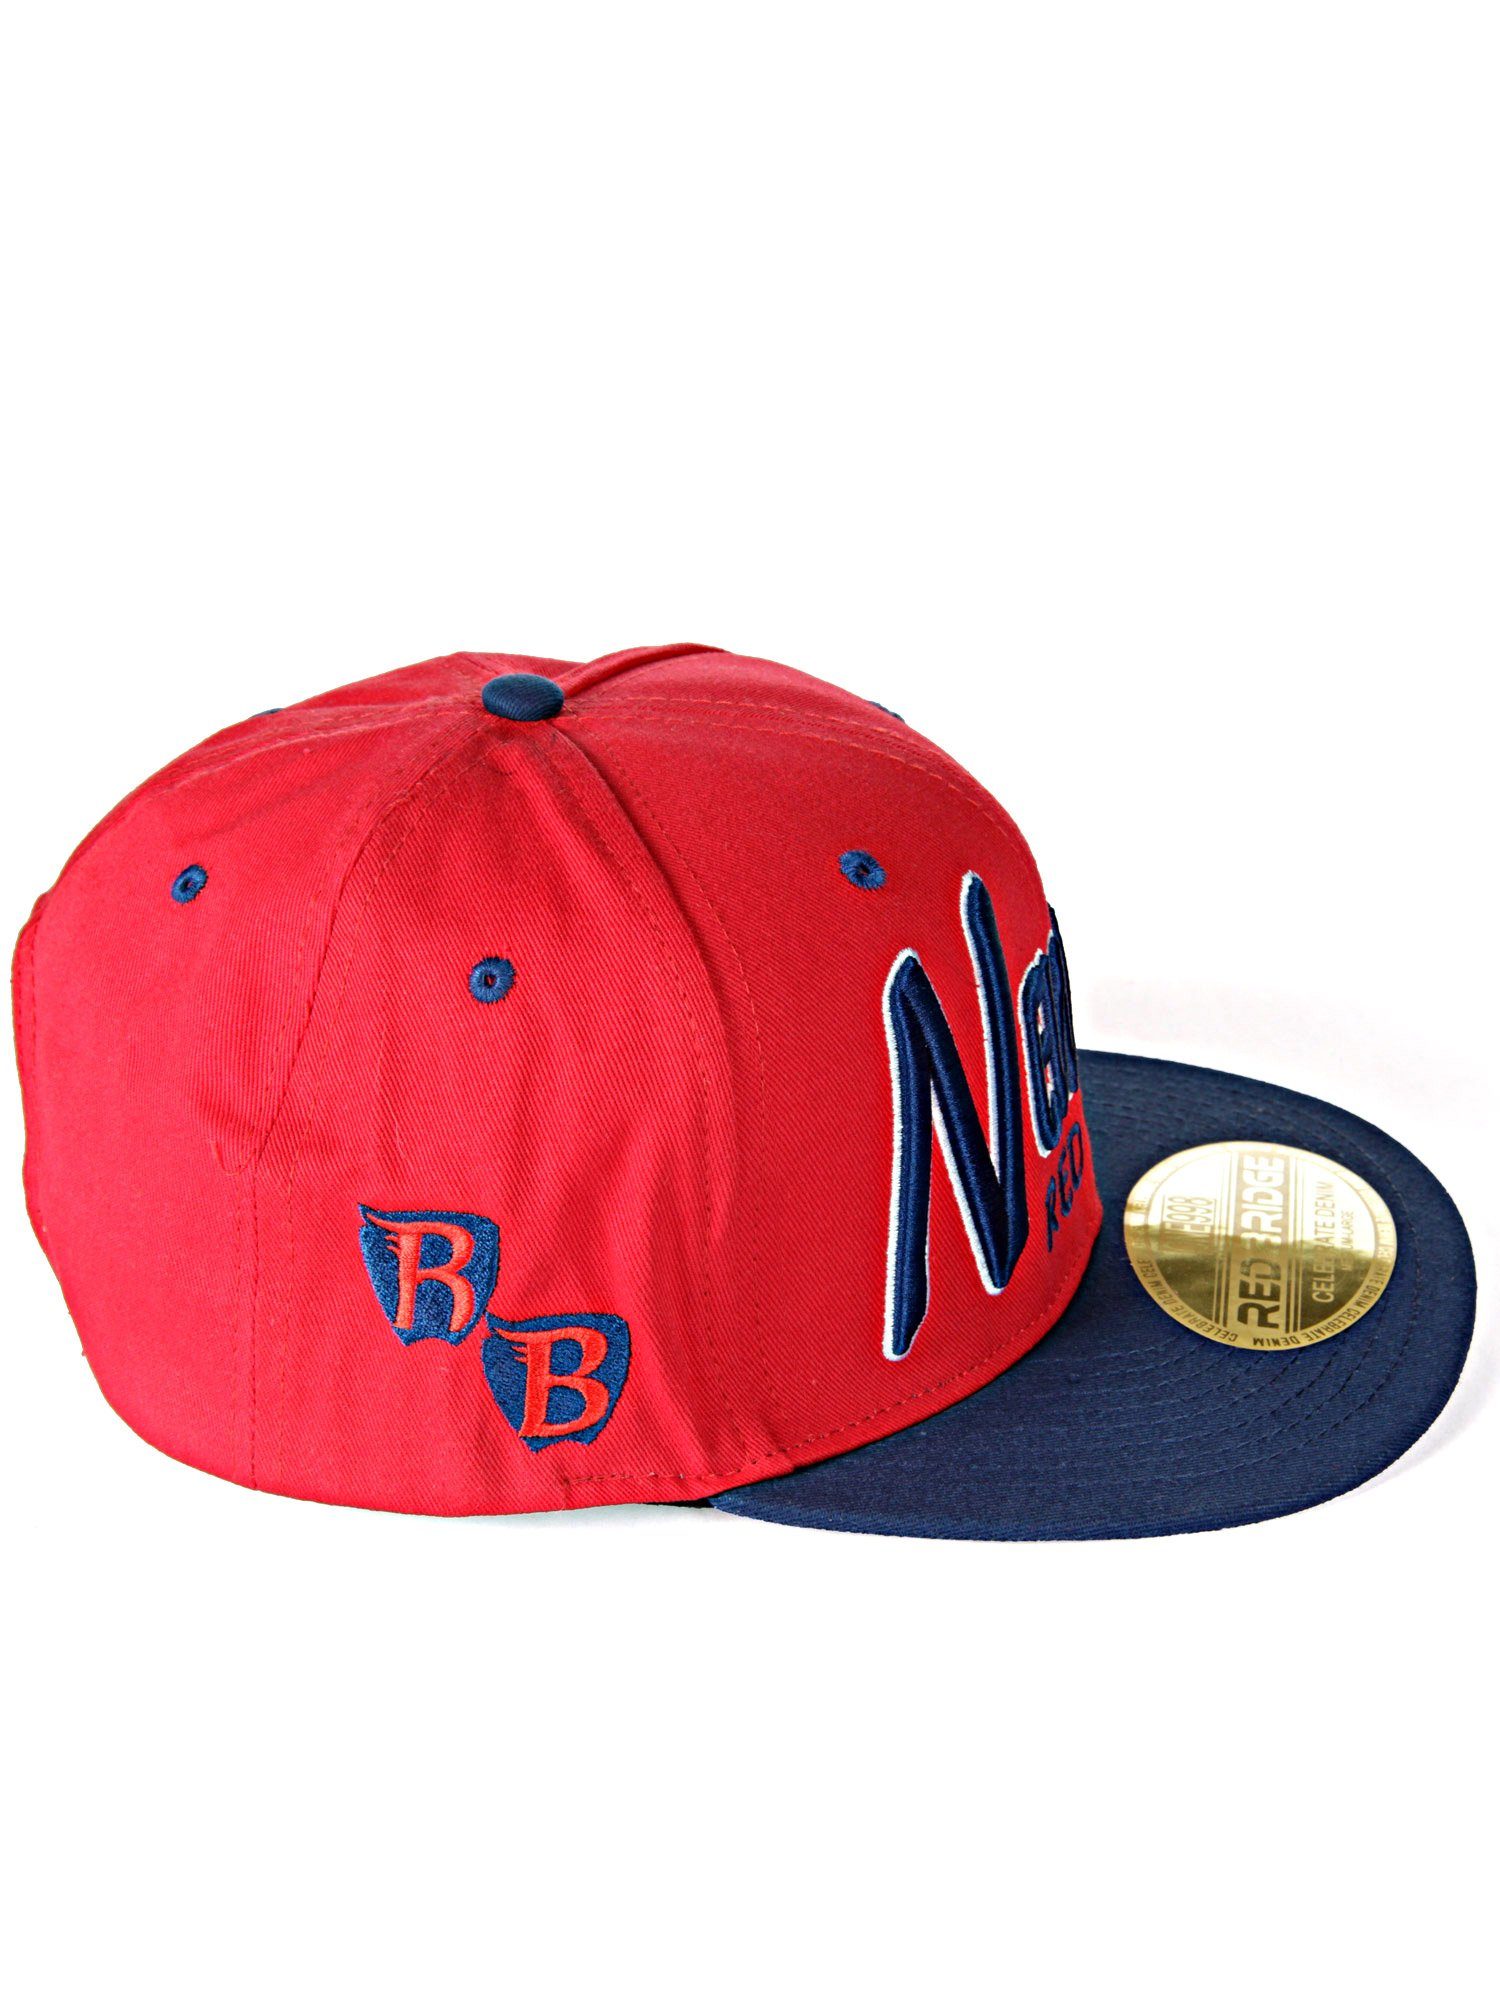 Bootle Schirm mit Baseball dunkelblau-rot Cap RedBridge kontrastfarbigem